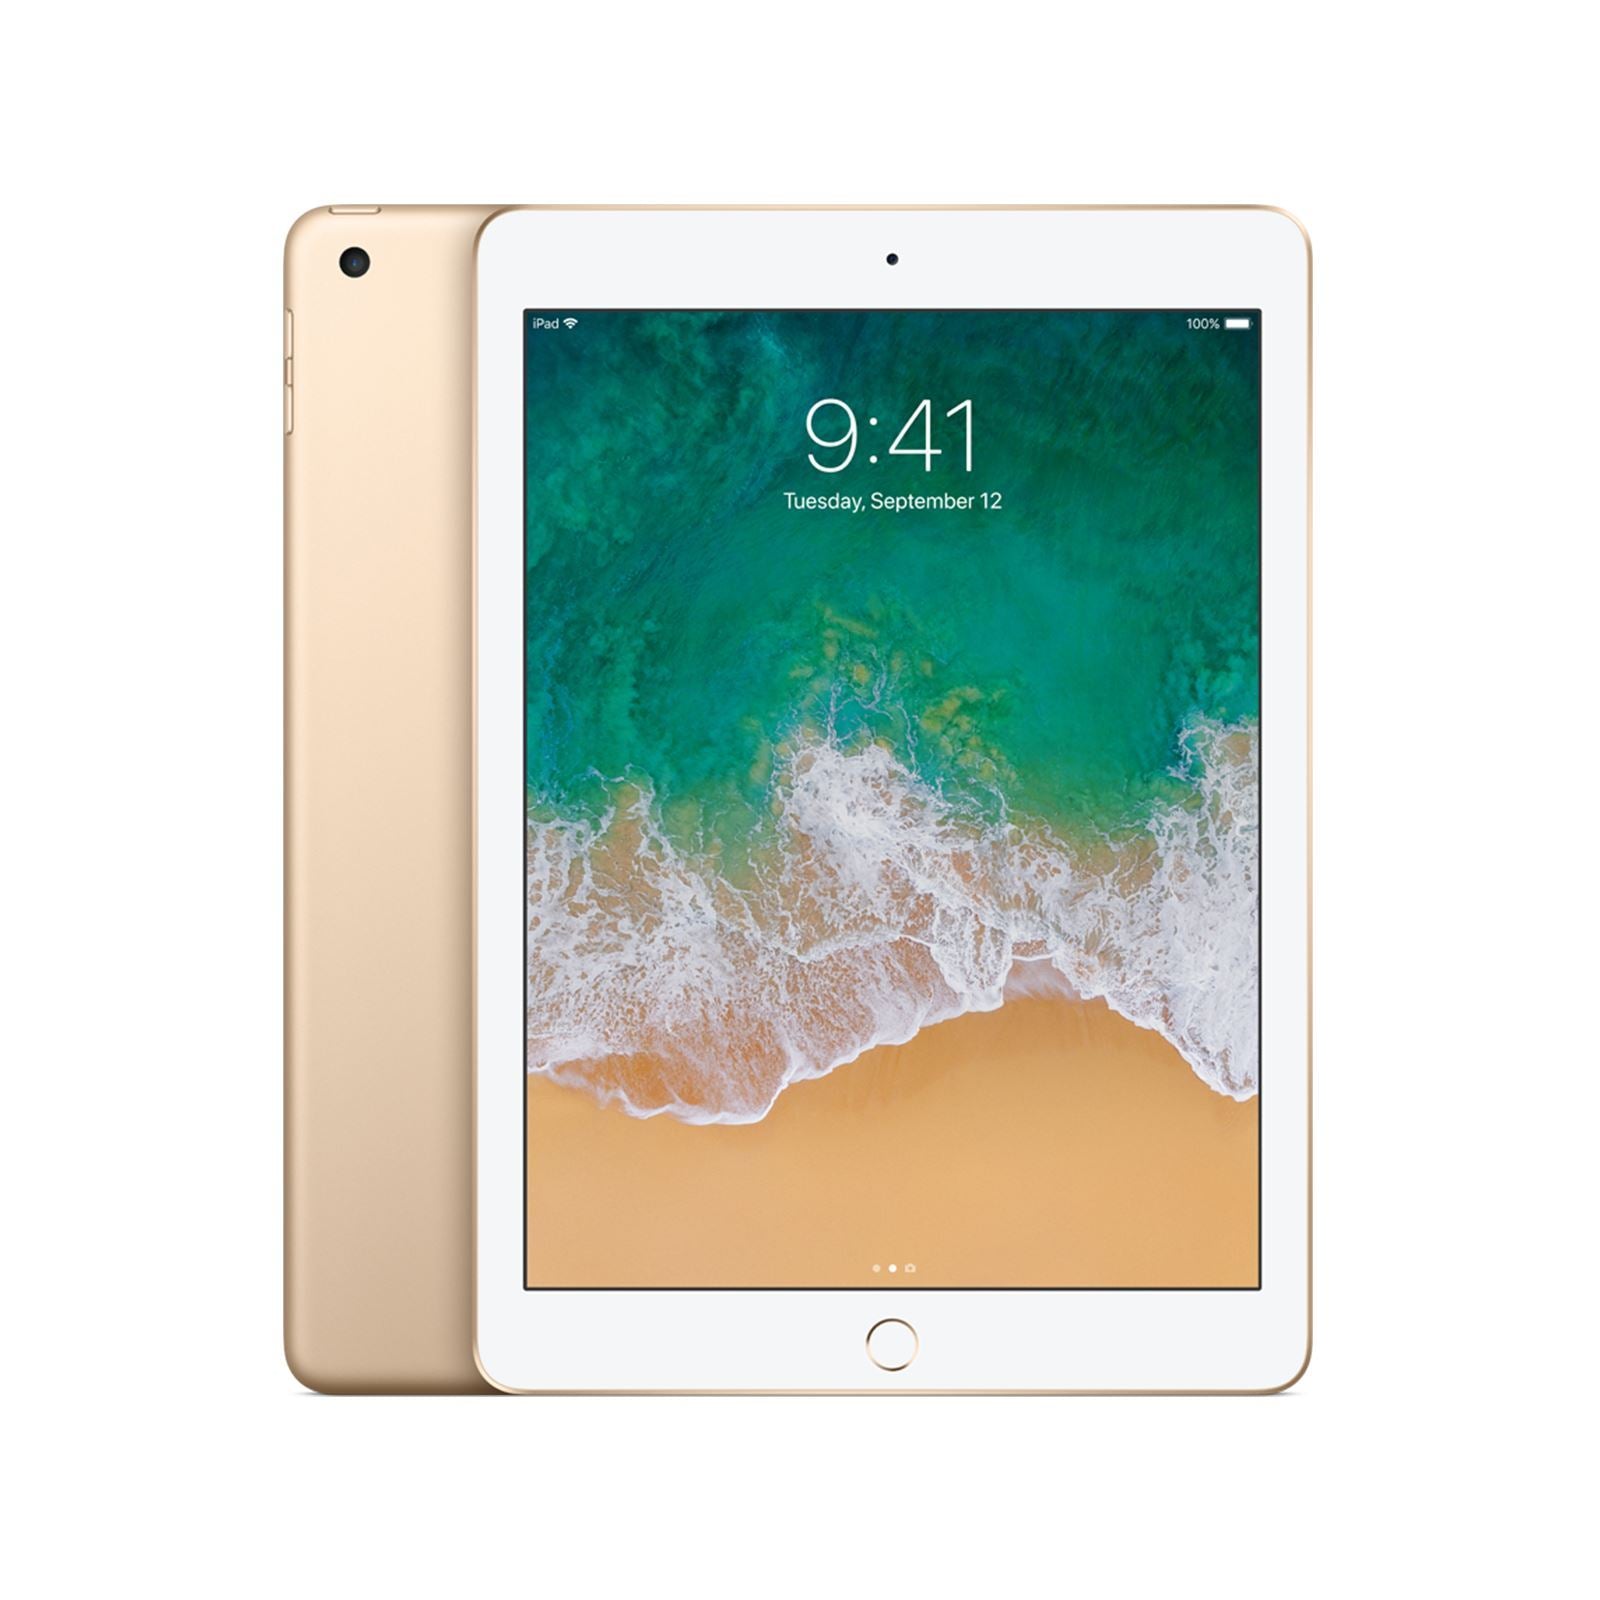 Apple iPad 5th Gen 128GB WiFi + 4G Gold Unlocked - Refurbished Excellent